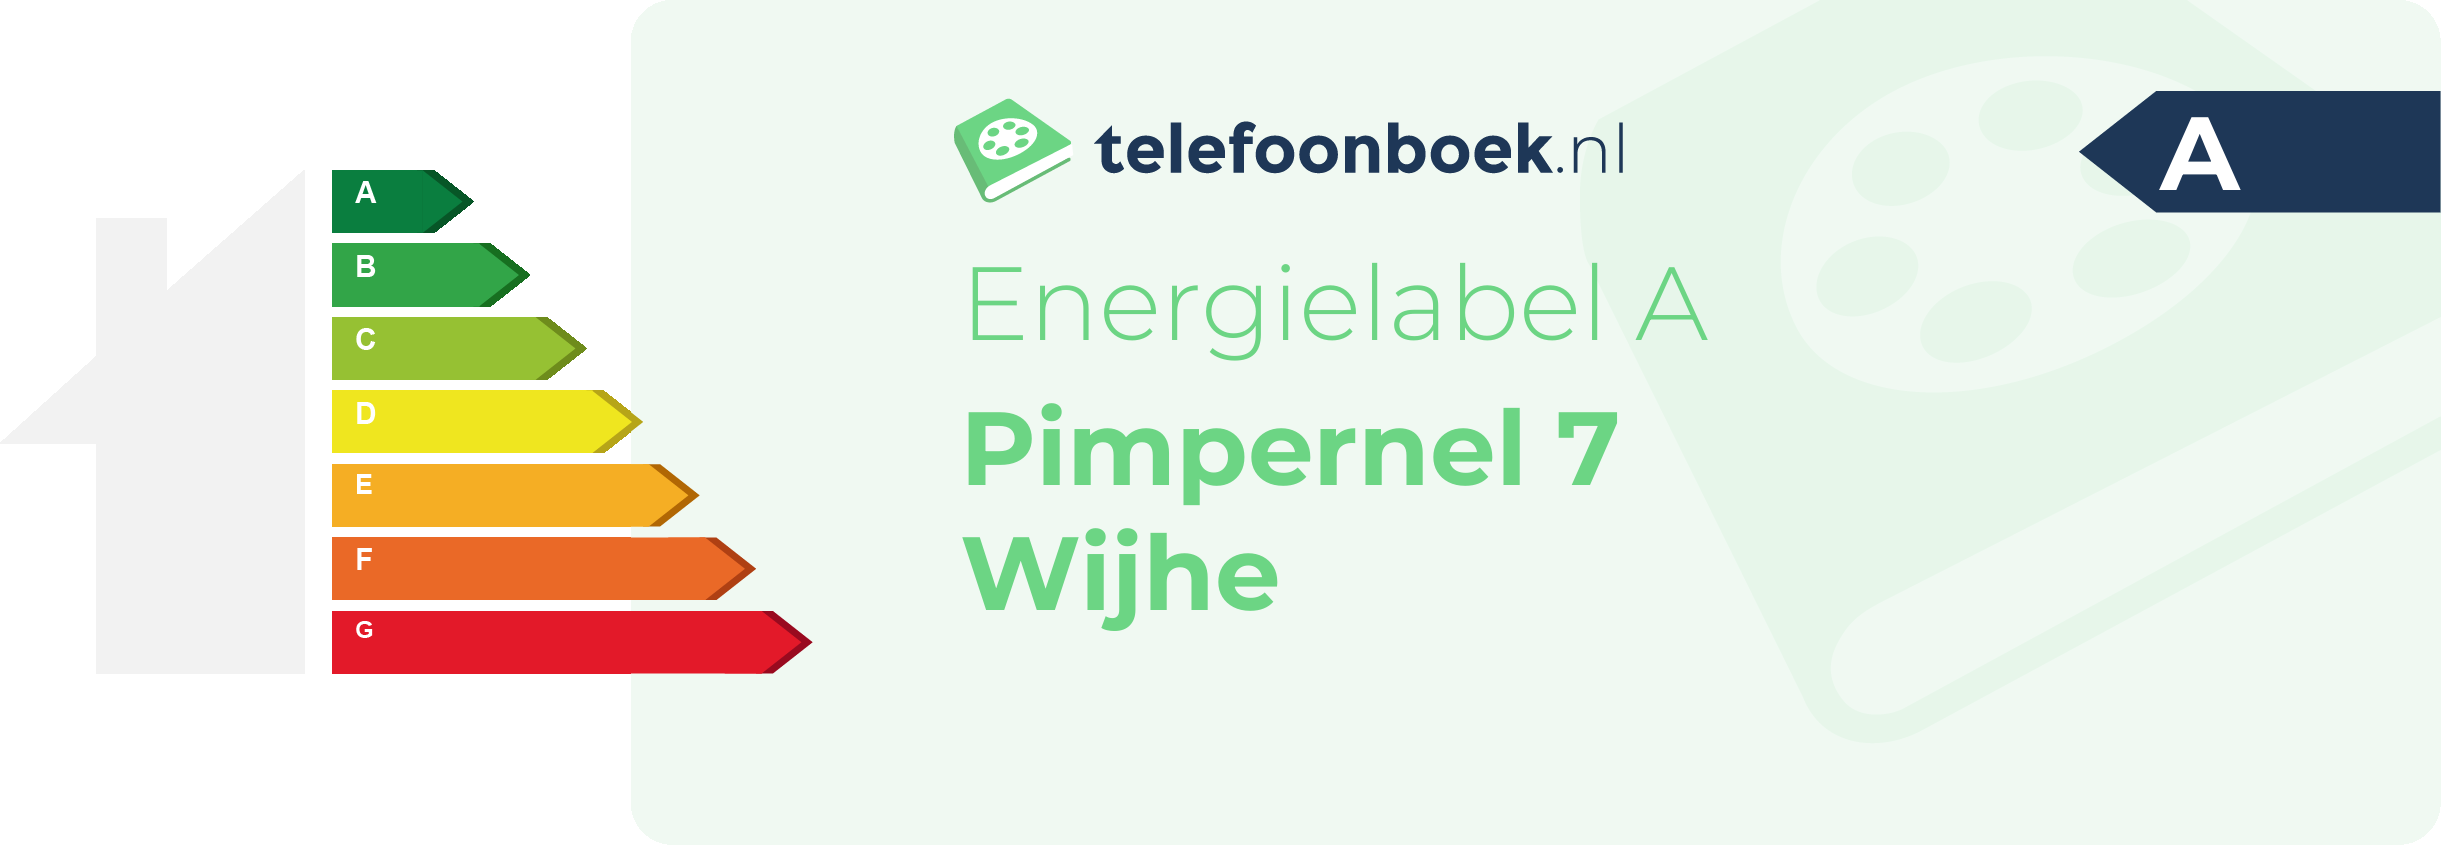 Energielabel Pimpernel 7 Wijhe